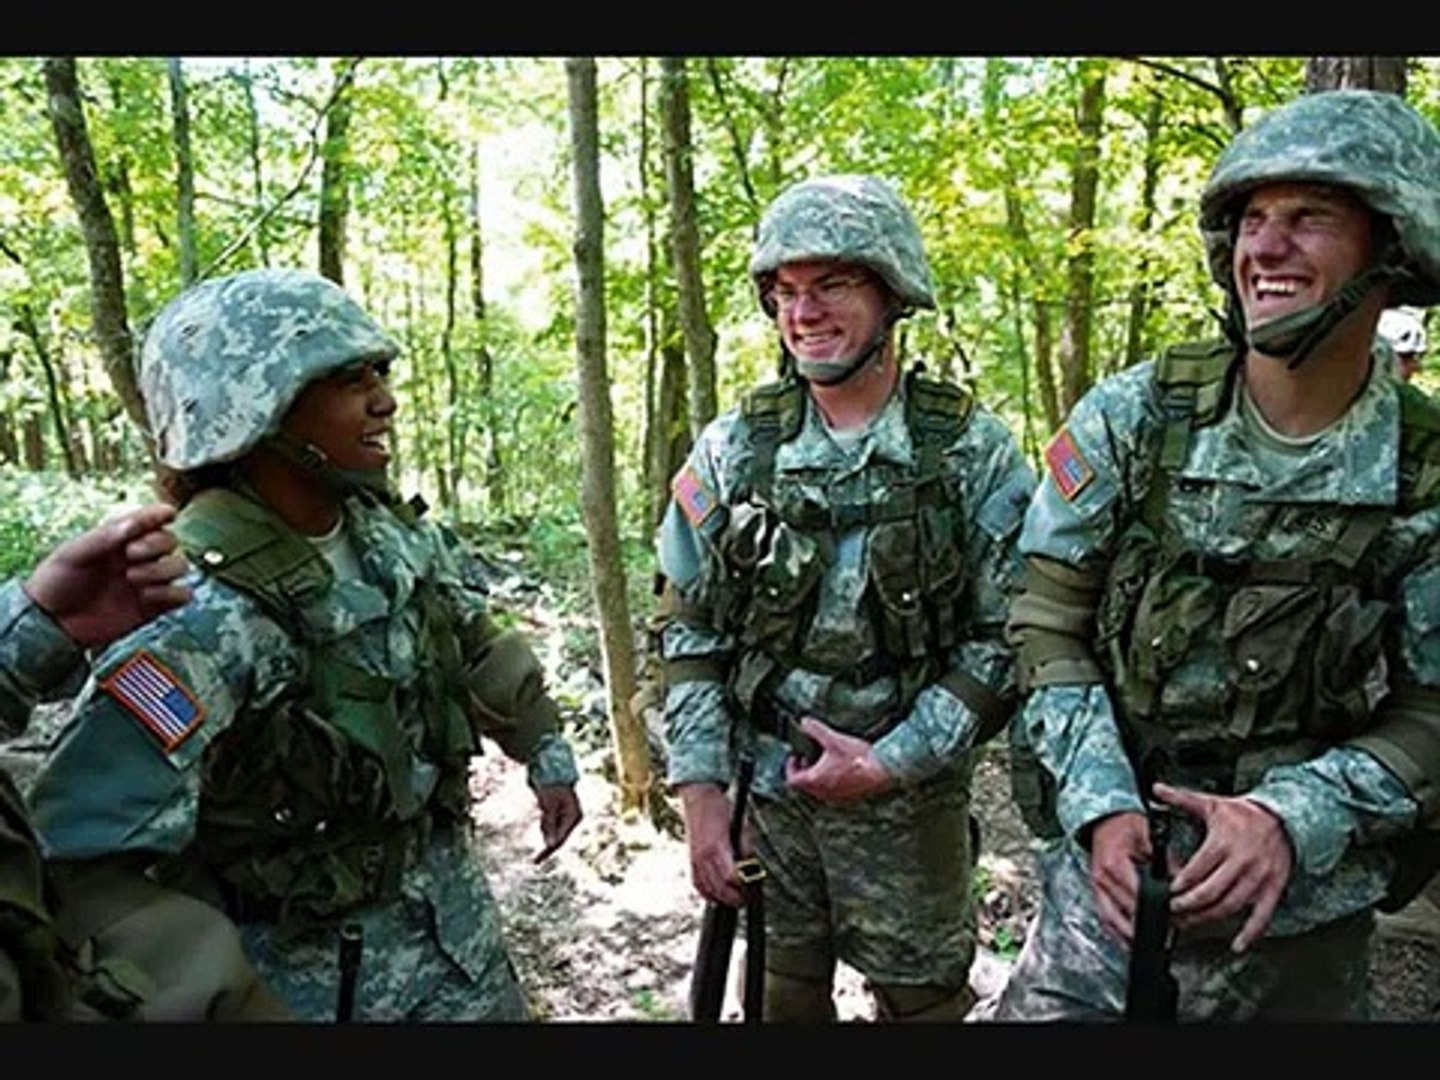 Army LTC ROTC